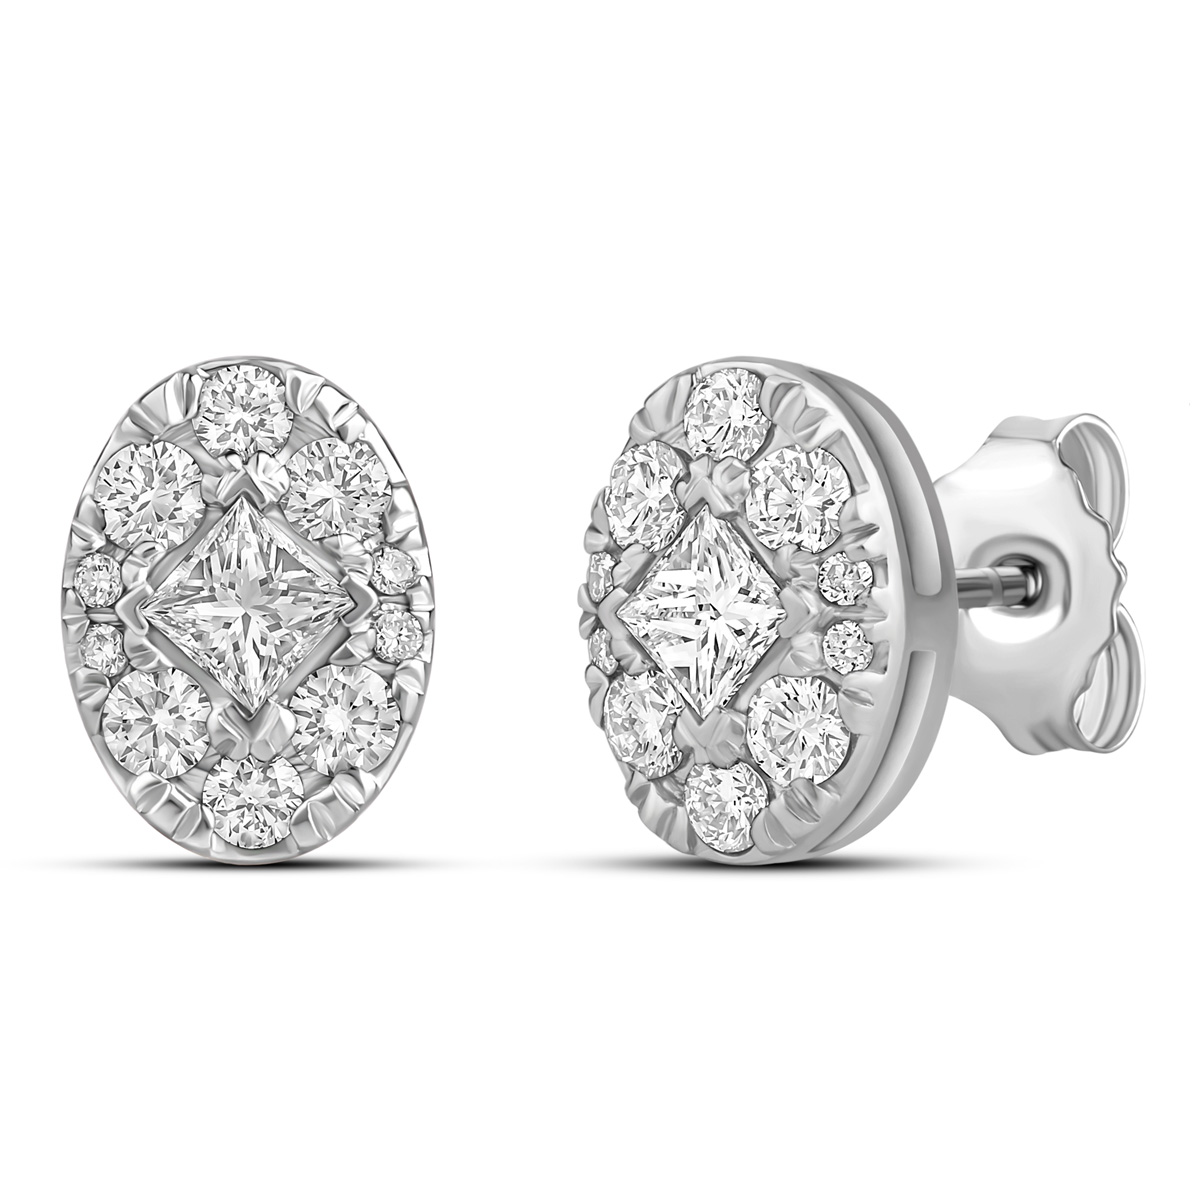 HE53114WWD4WN
14K White Gold princess  cut diamond earrings